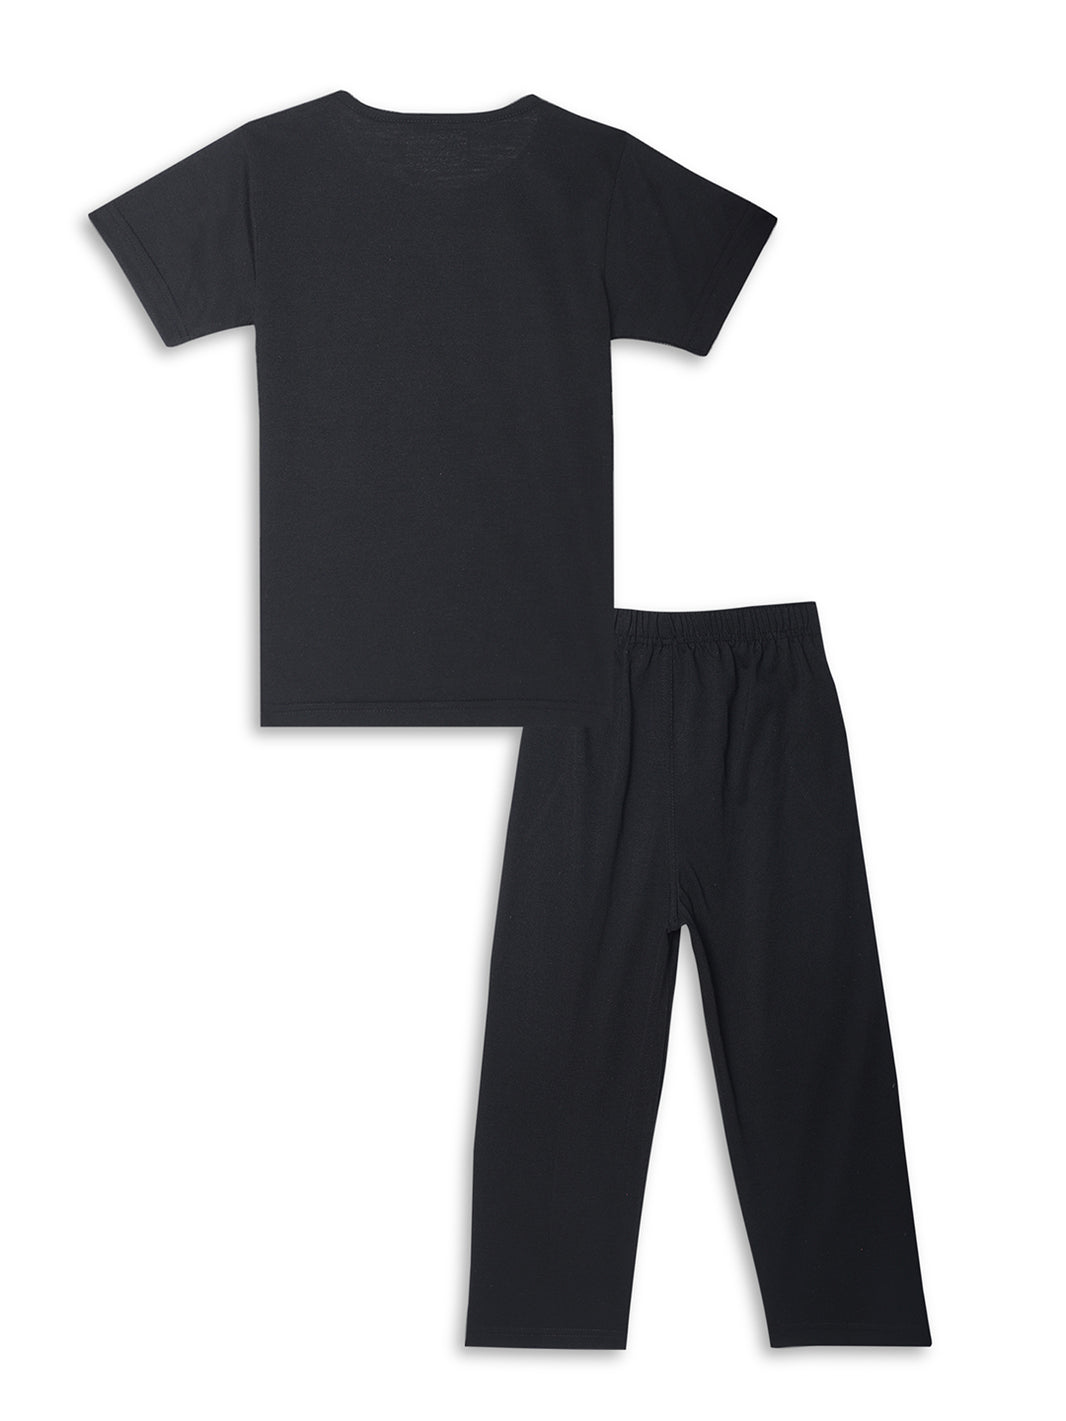 Vimal Jonney Printed Black Regular Fit Cotton blended Tshirt And Bottom Set For Kids